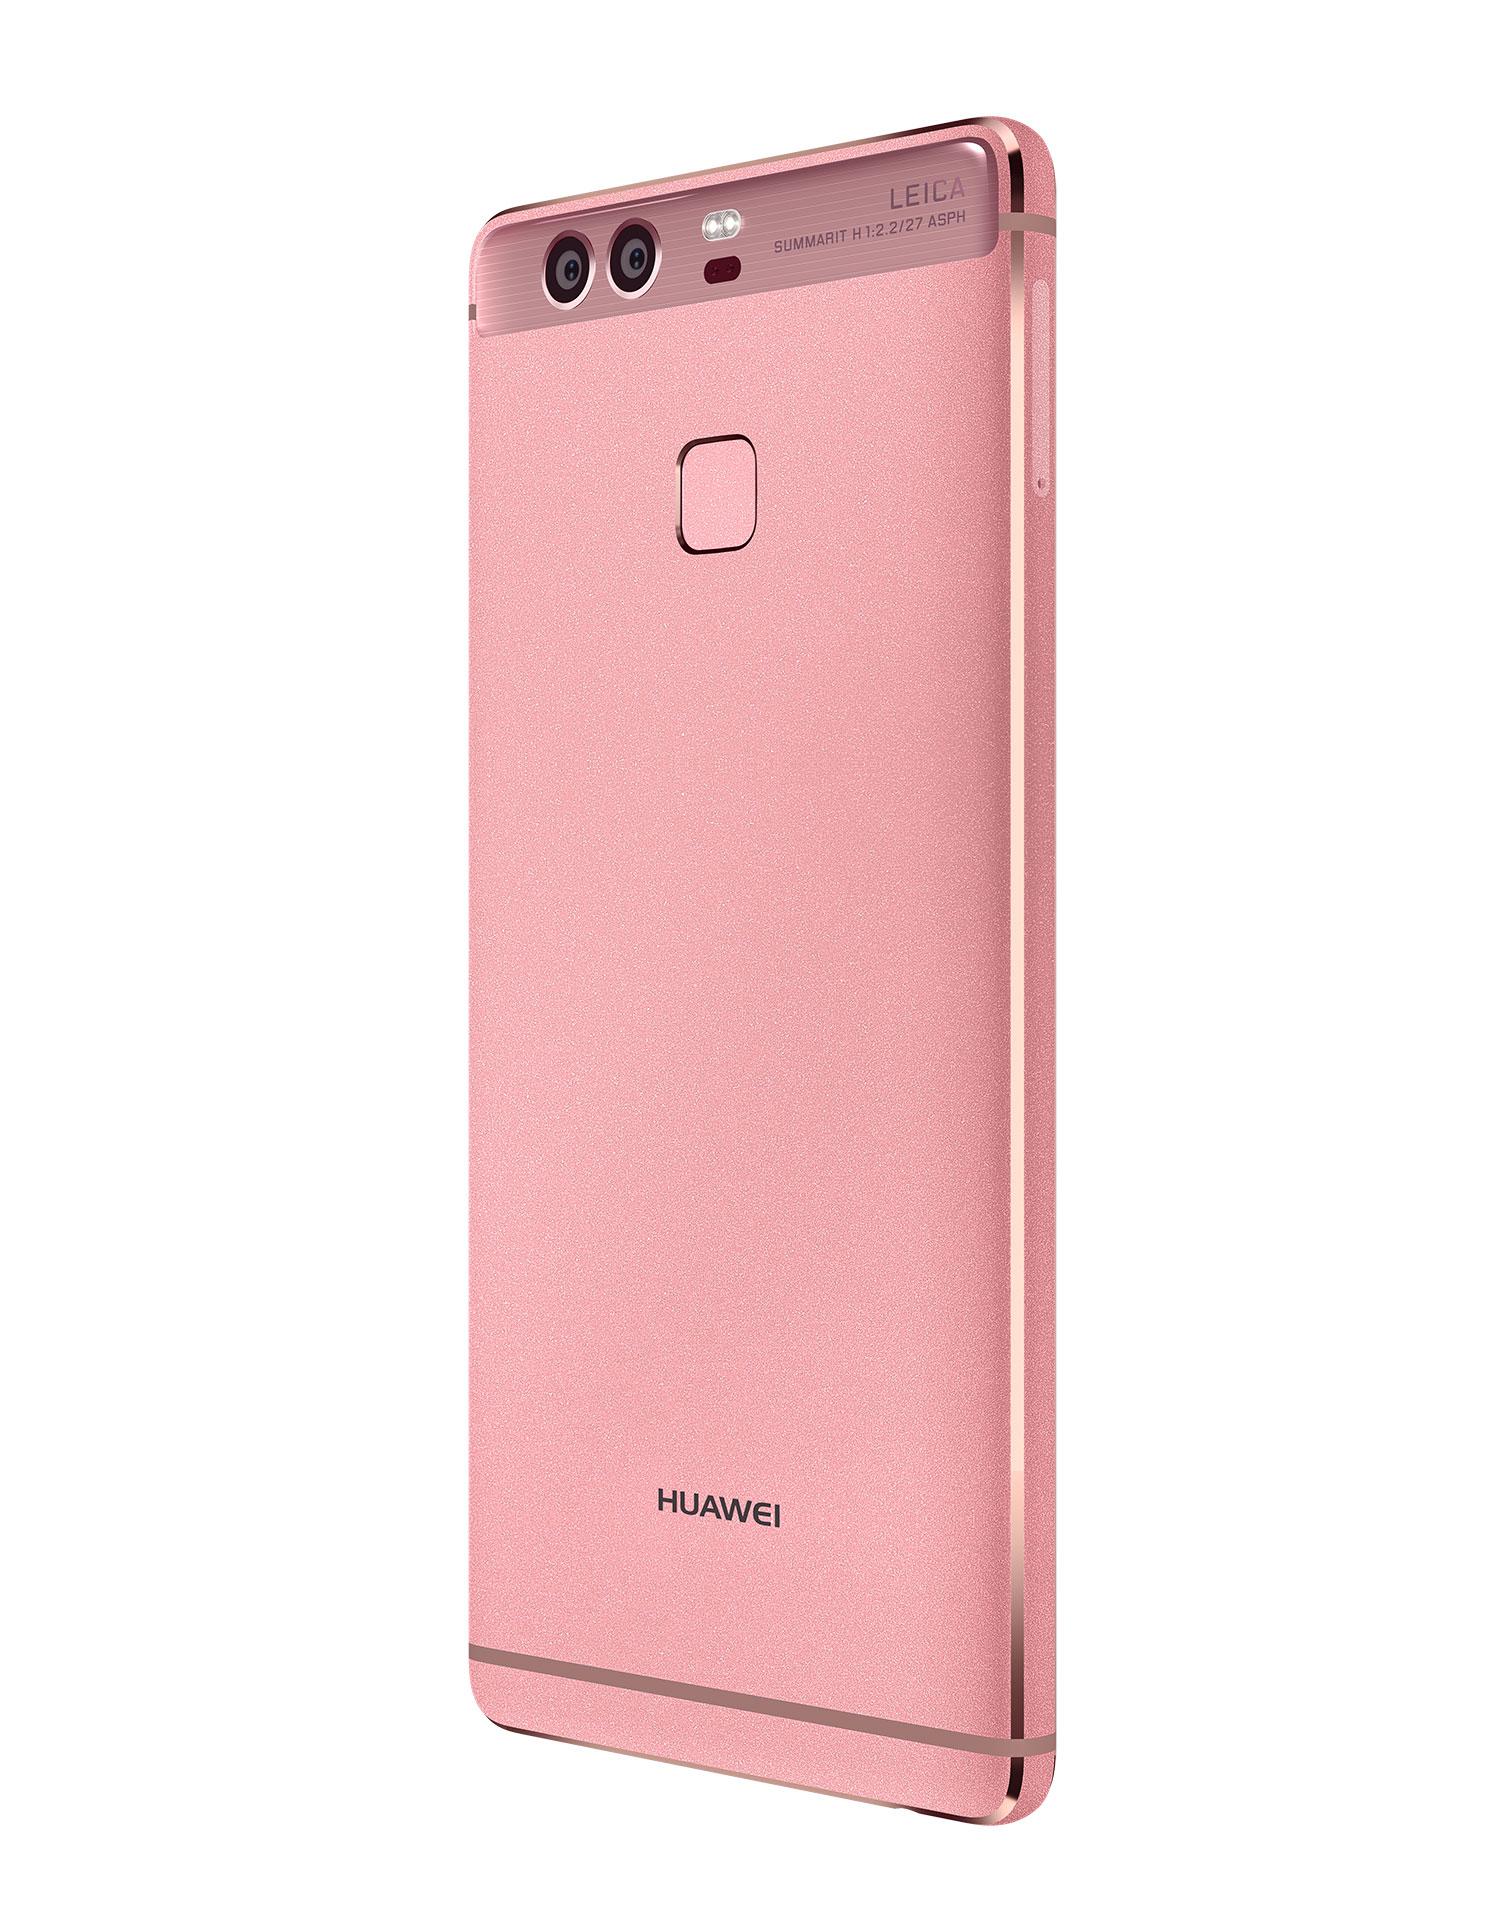 Huawei P9 rosa